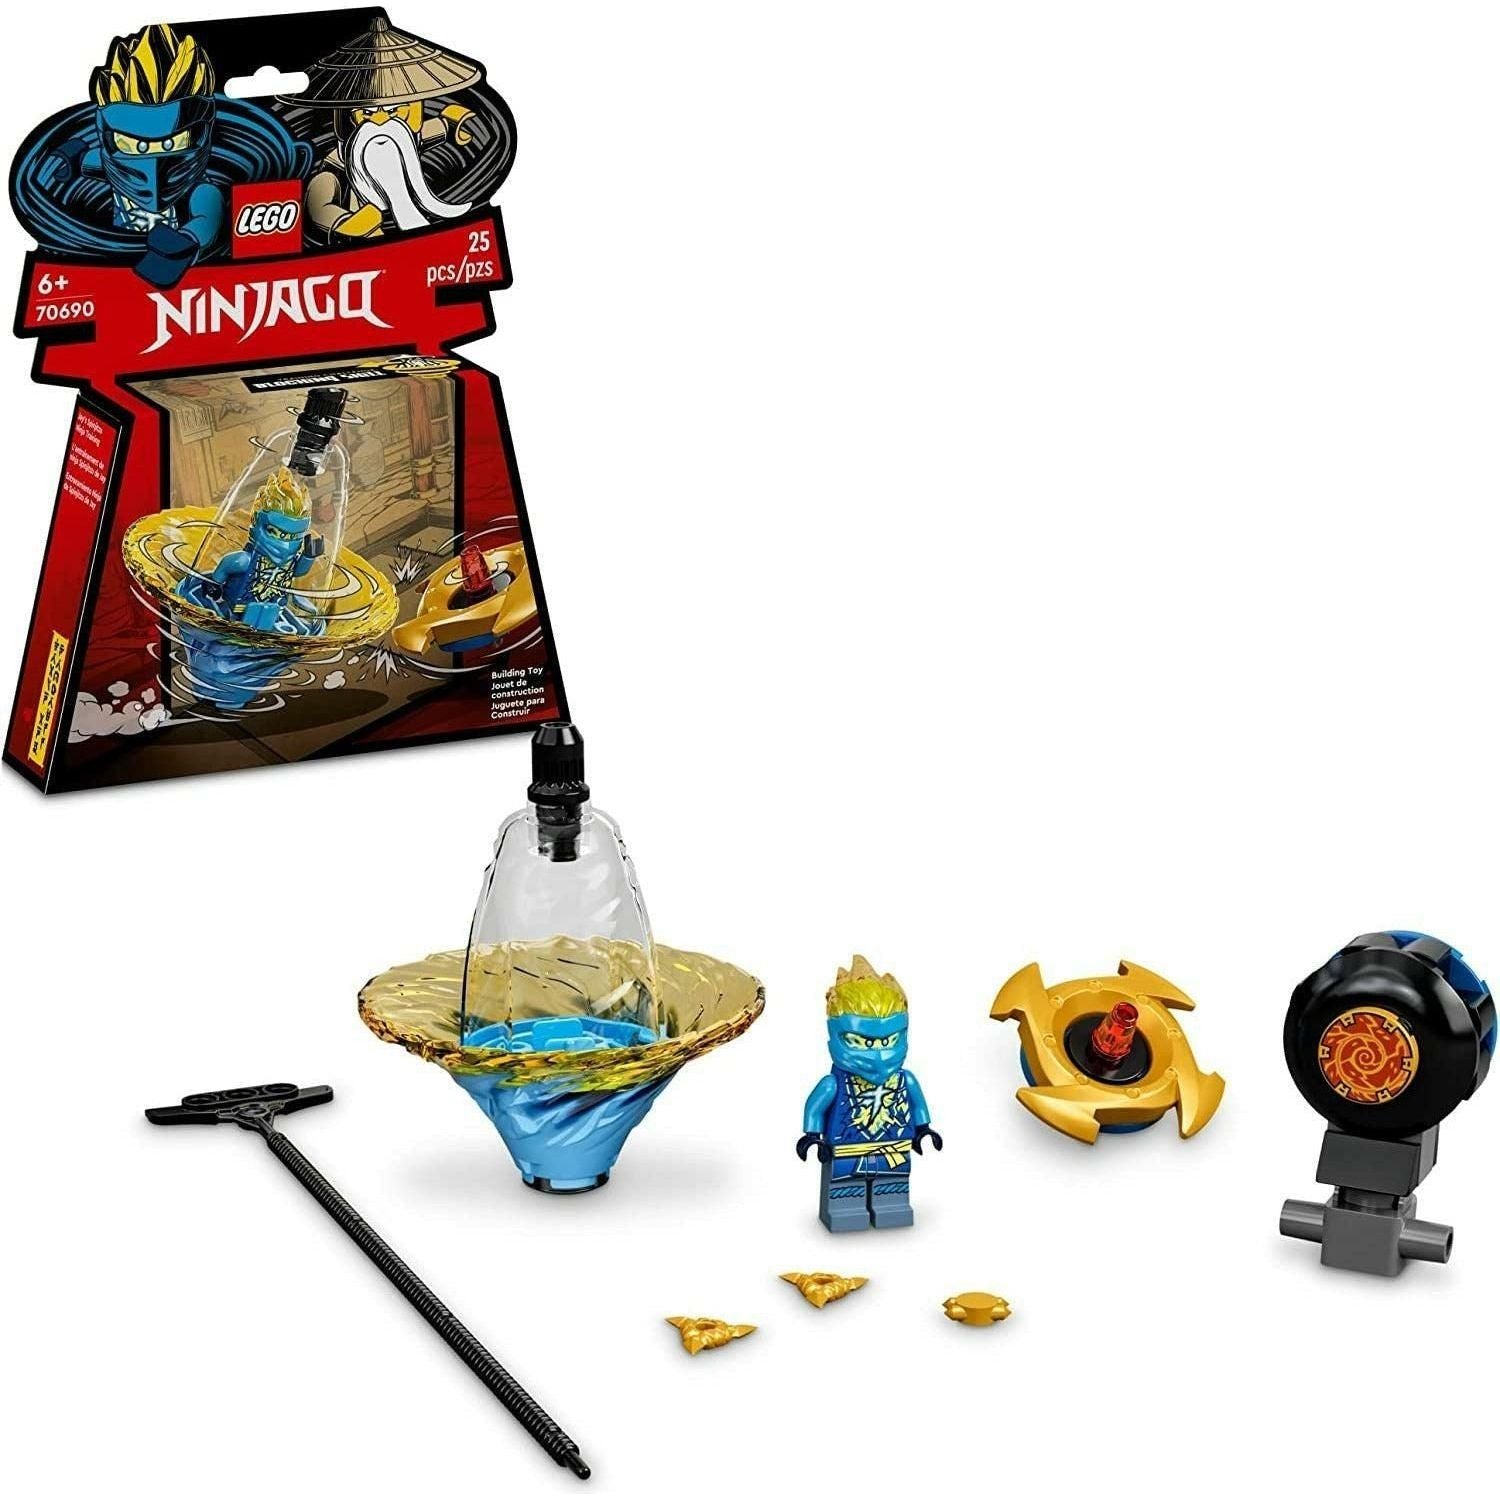 LEGO Ninjago 70690 Jay’s Spinjitzu Ninja Training Spinning Toy (25 Pieces) - BumbleToys - 5-7 Years, 8+ Years, Boys, LEGO, Ninjago, OXE